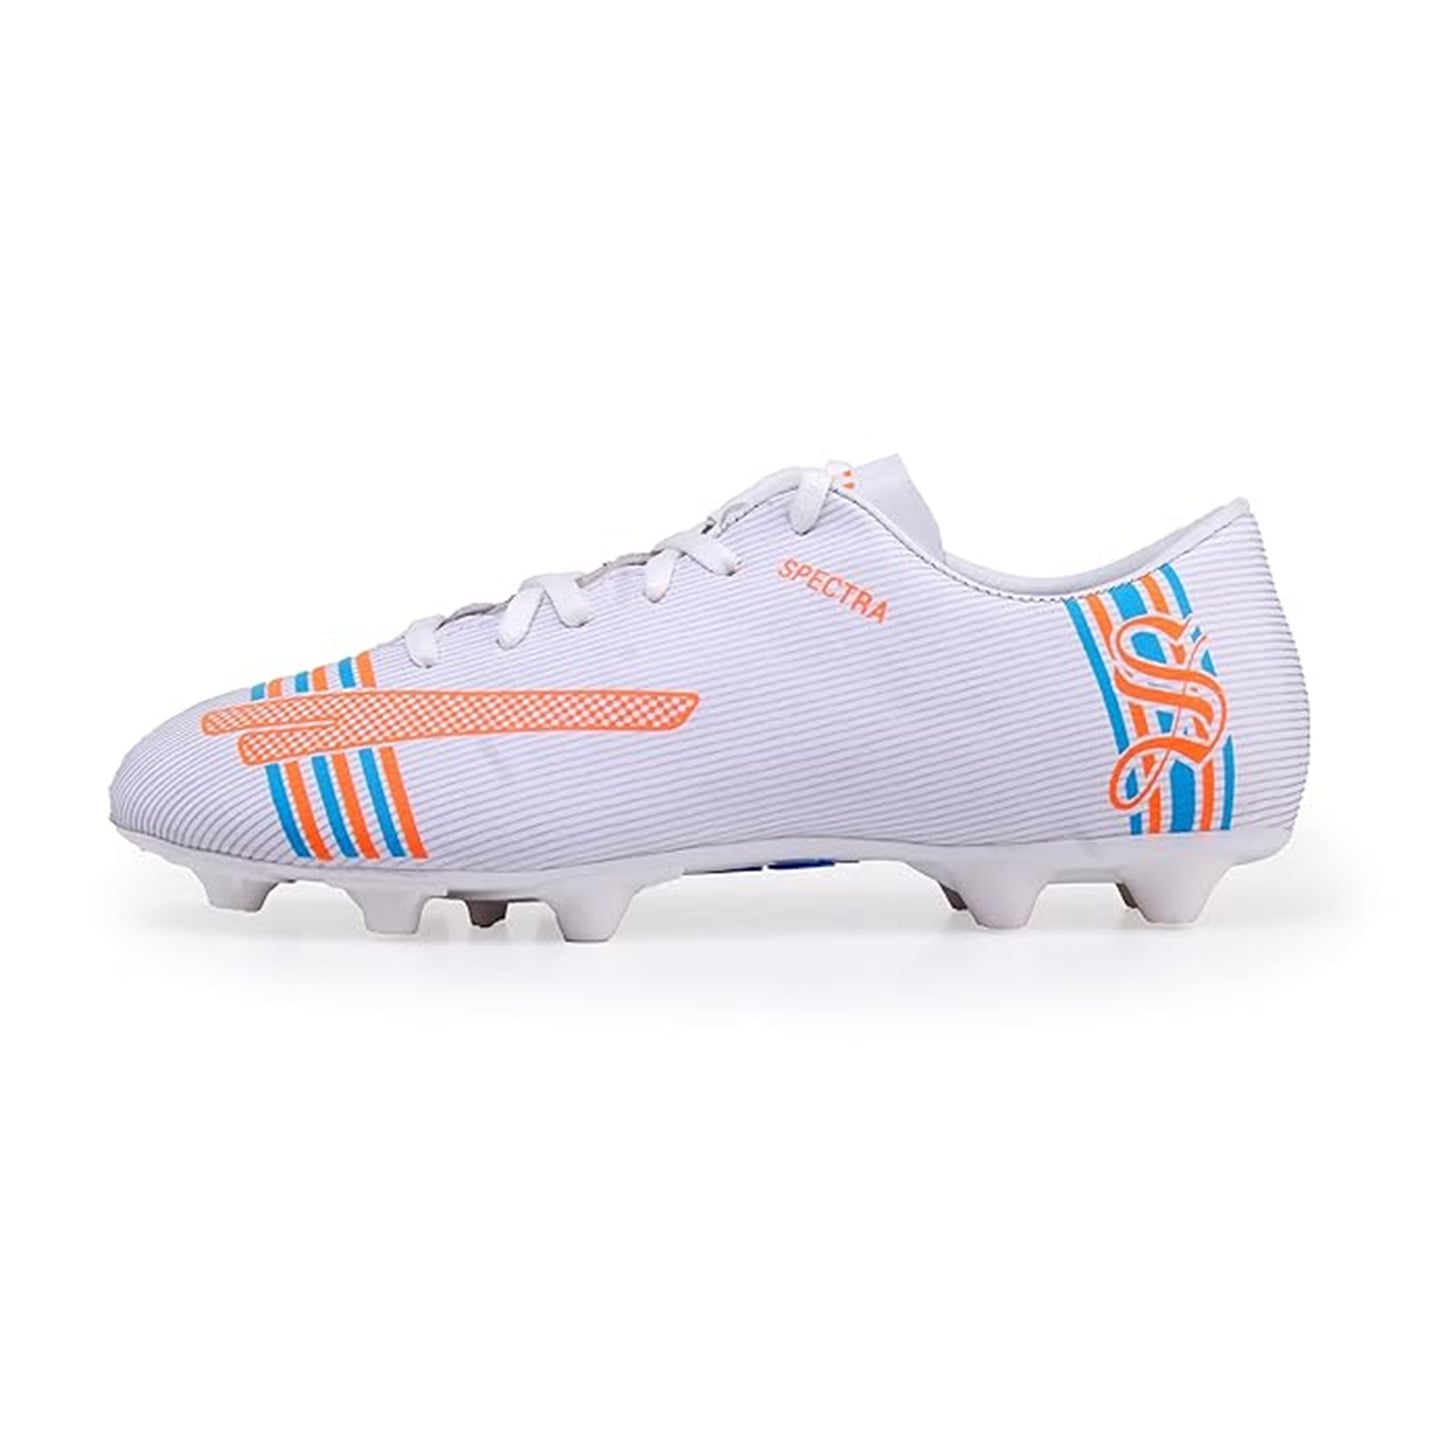 Sega Spectra Football Shoes - Best Price online Prokicksports.com